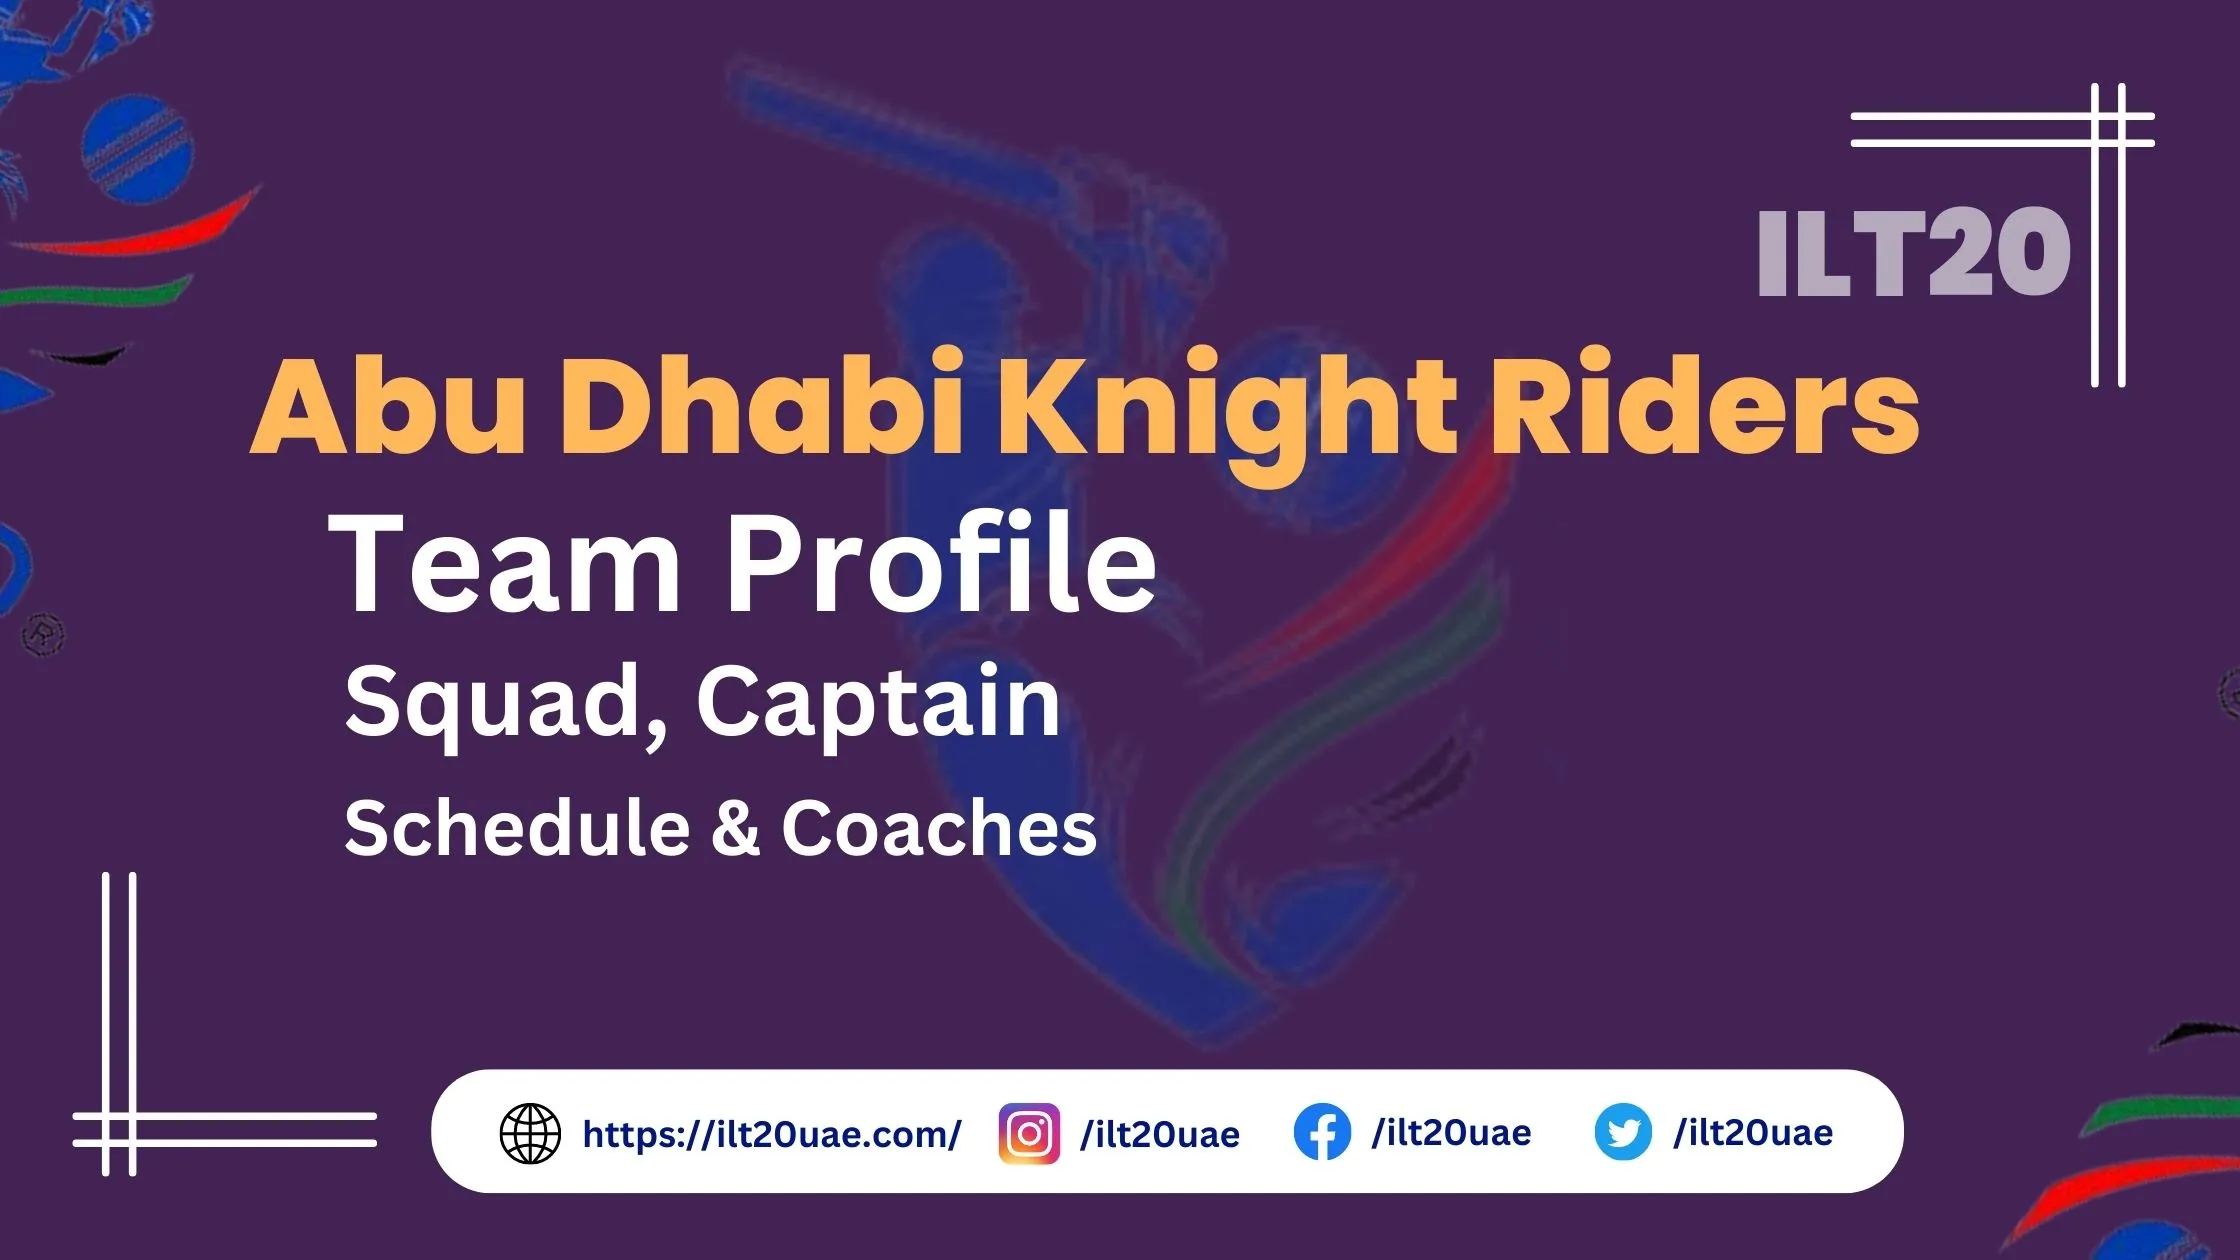 Abu Dhabi Knight Riders Team